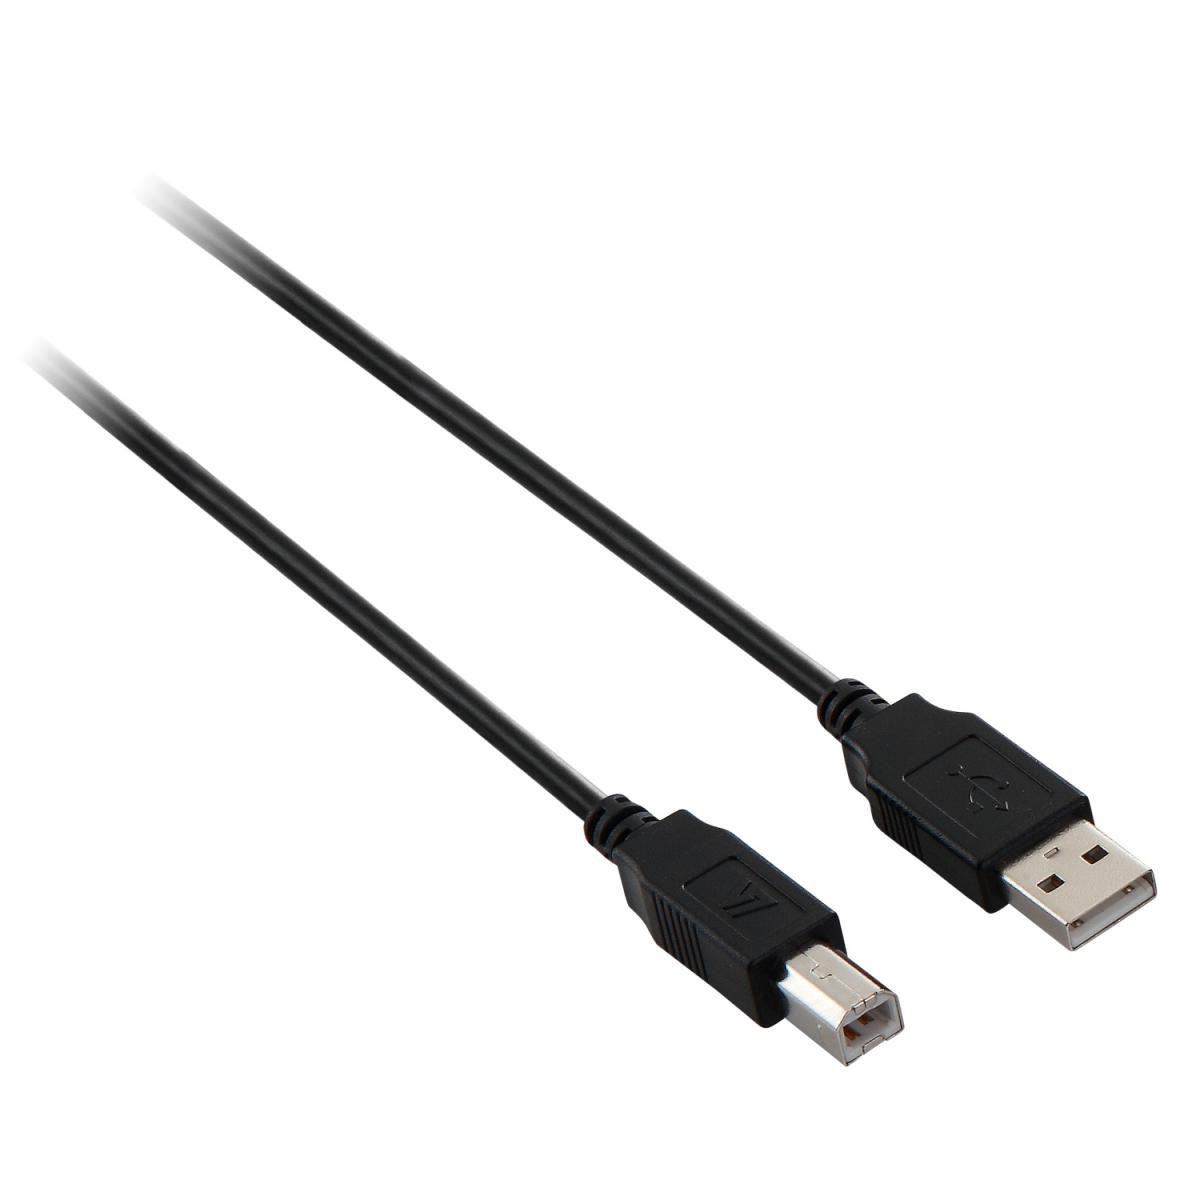 V7 - V7 CABLE USB A-B MALE NOIR 3M - Câble antenne